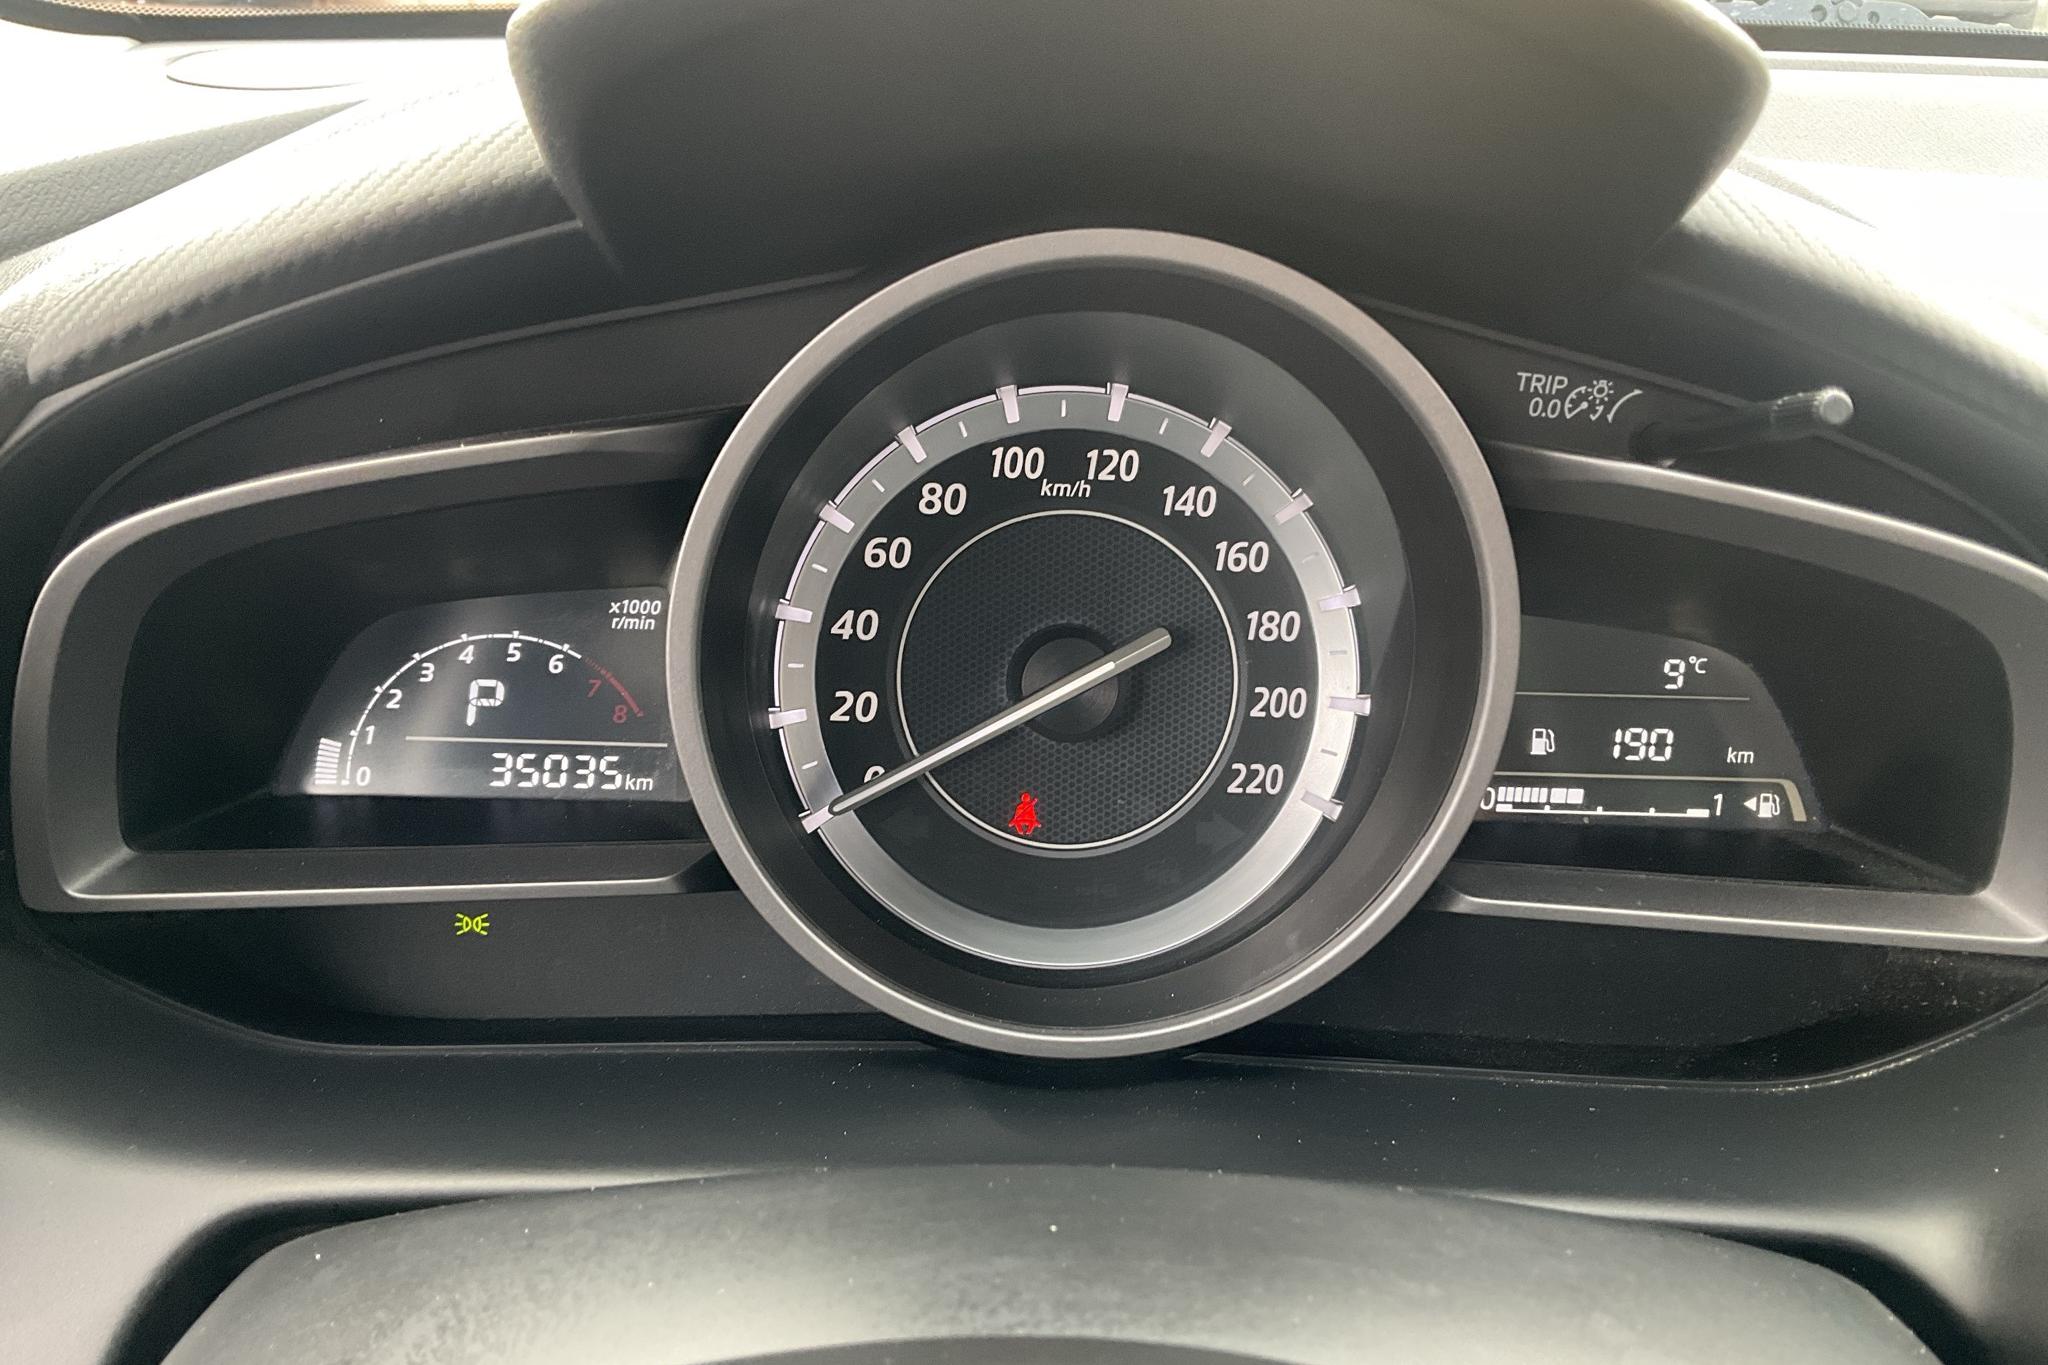 Mazda 2 1.5 5dr (90hk) - 3 503 mil - Automat - svart - 2017